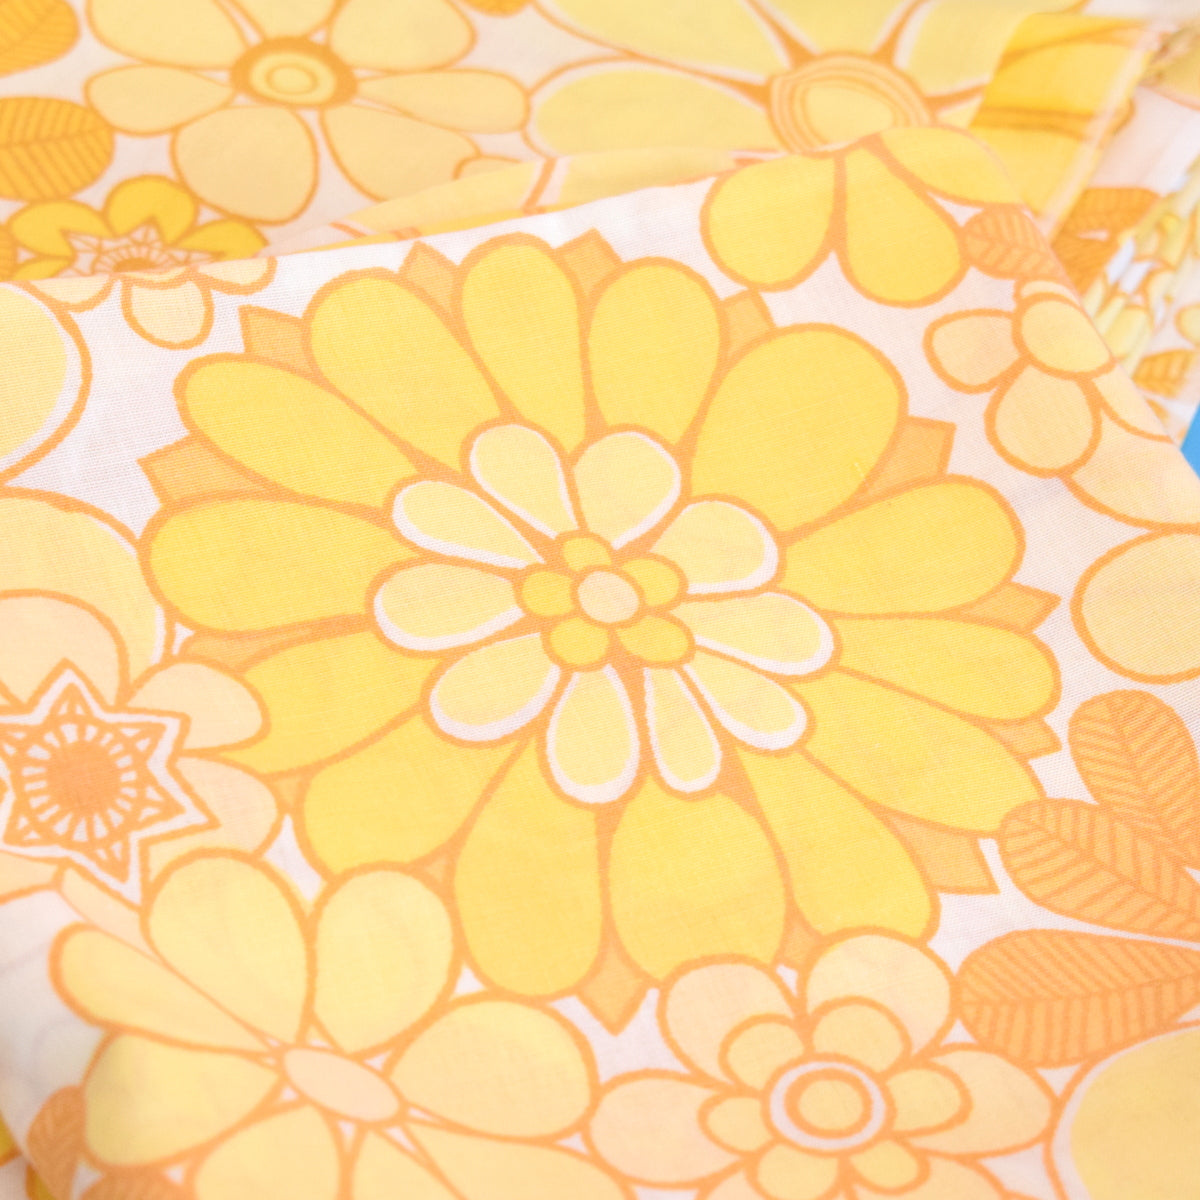 Vintage 1960s Double Sheet / Pillow Cases - Flower Power Cotton - Yellow & Orange